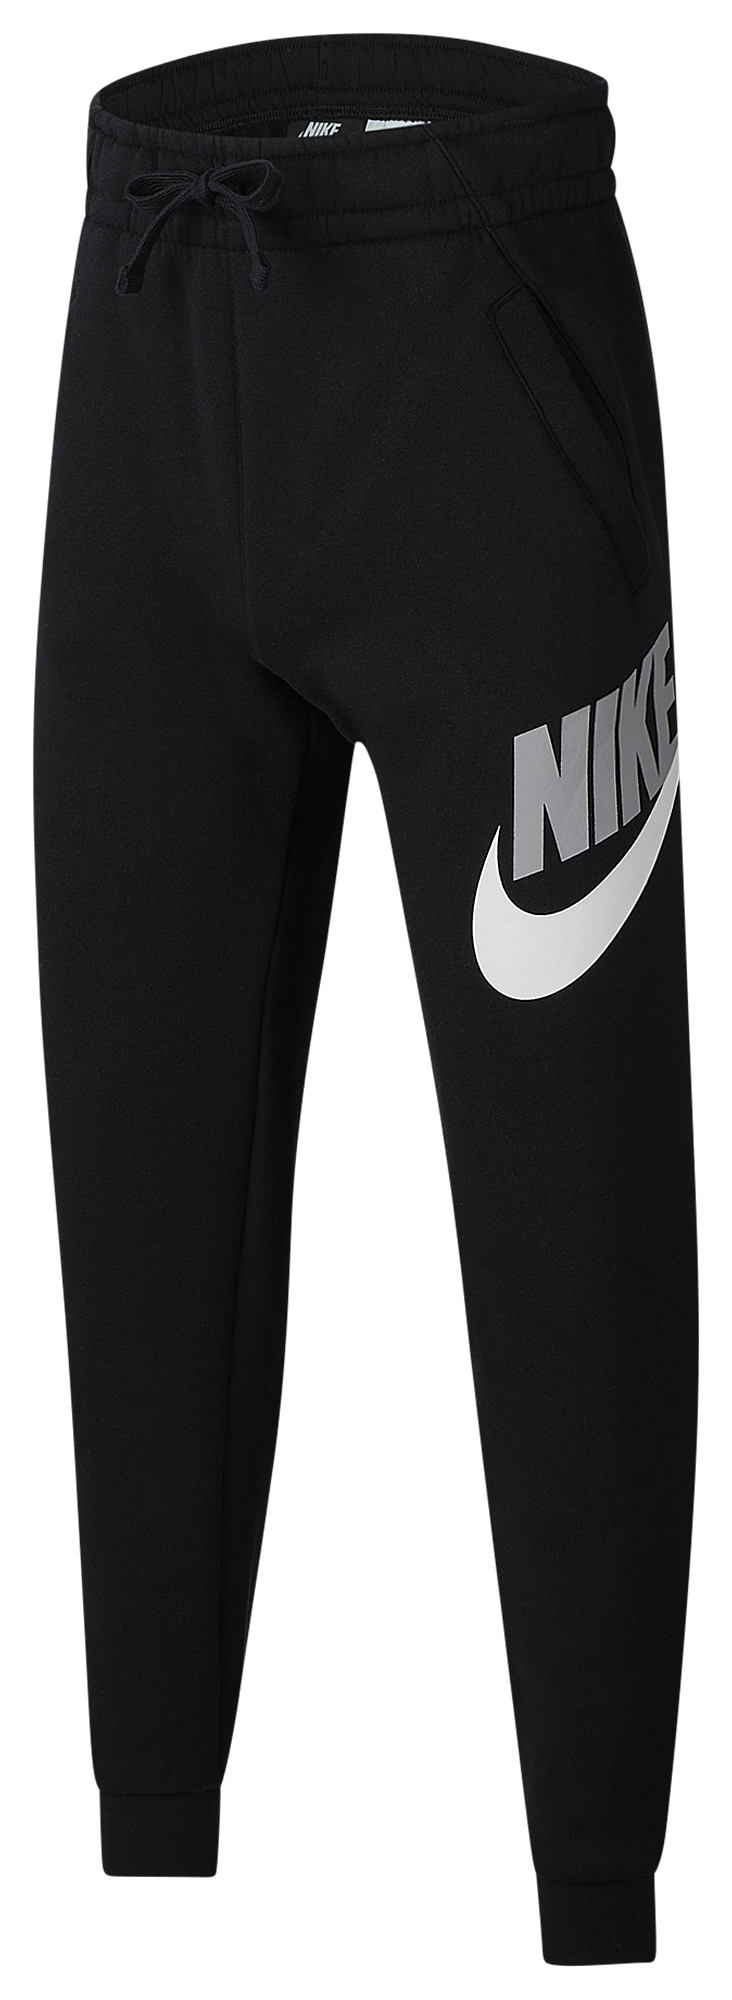 black nike jogging suit